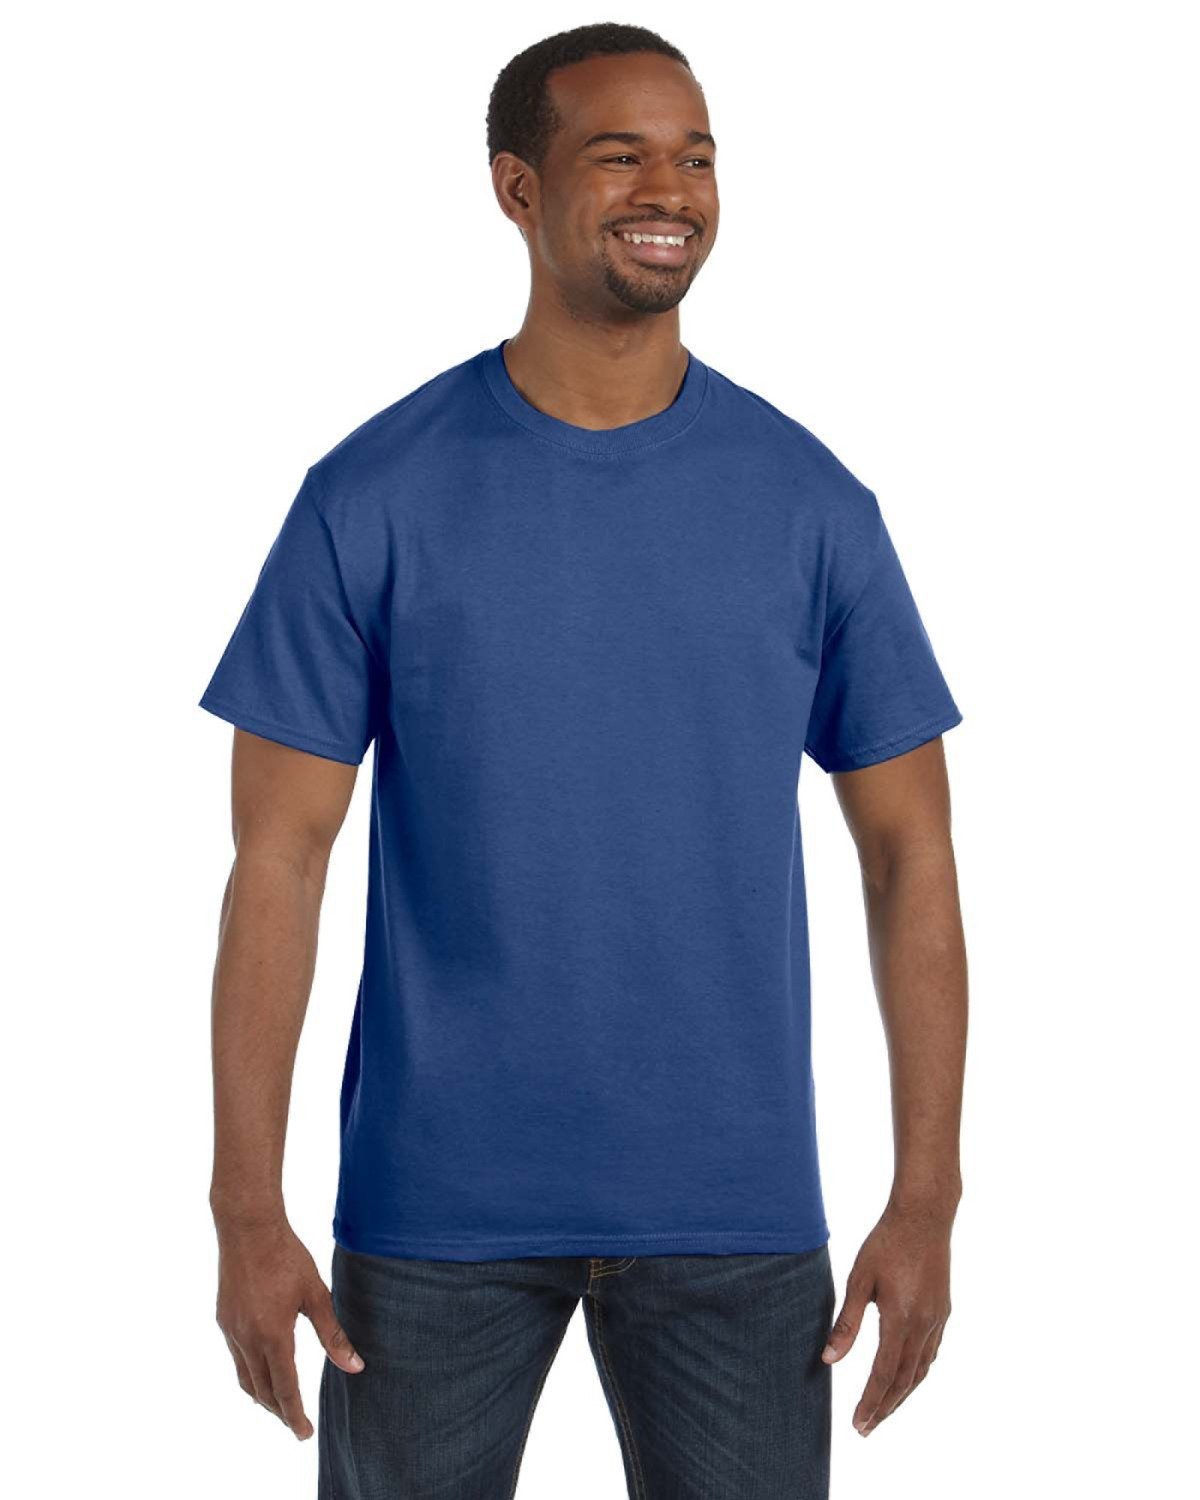 29M-Jerzees-VINTAGE HTH BLUE-Jerzees-T-Shirts-1